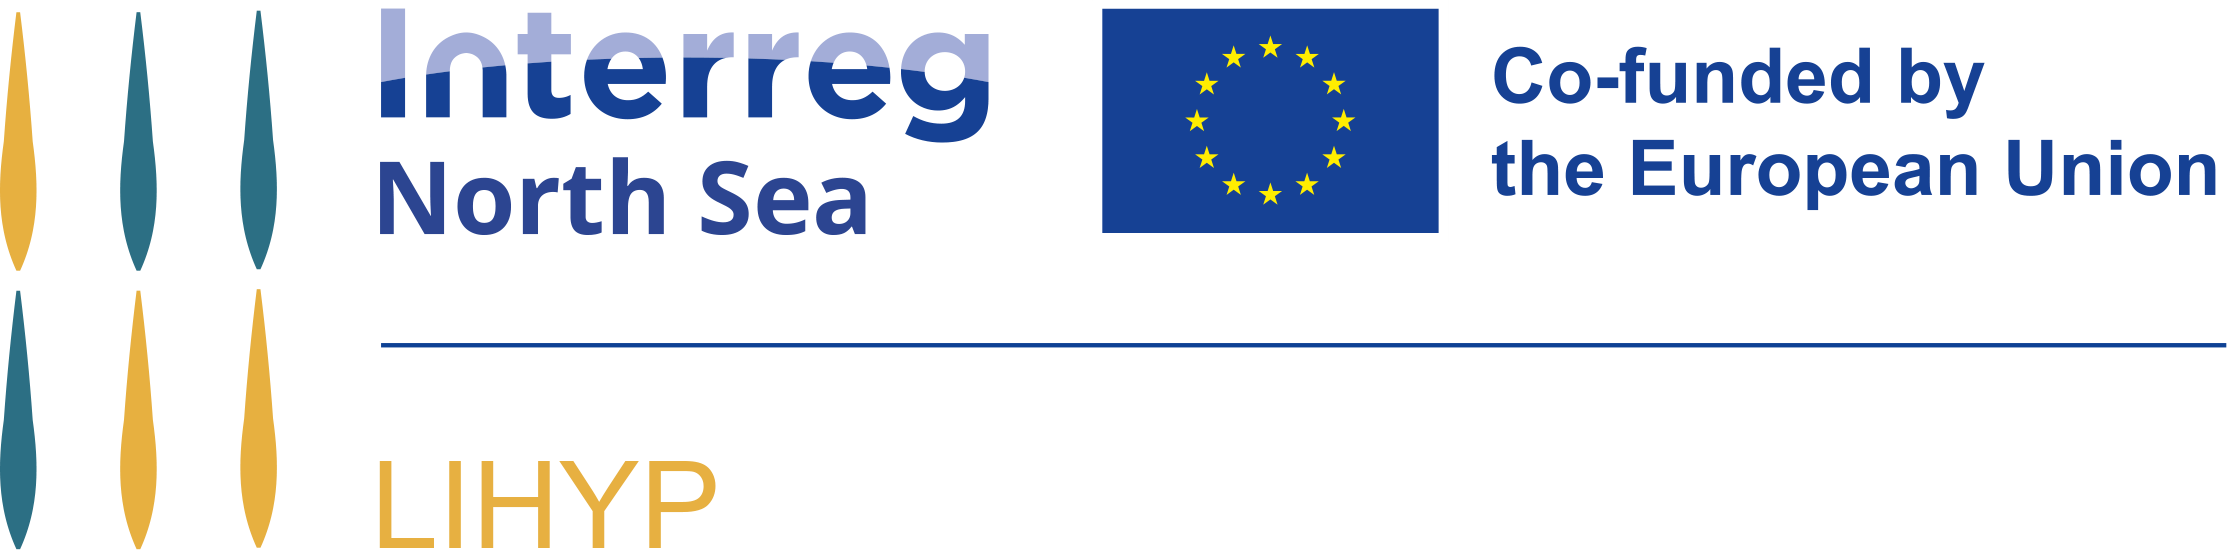 Interreg North Sea region, co-funded by the EU